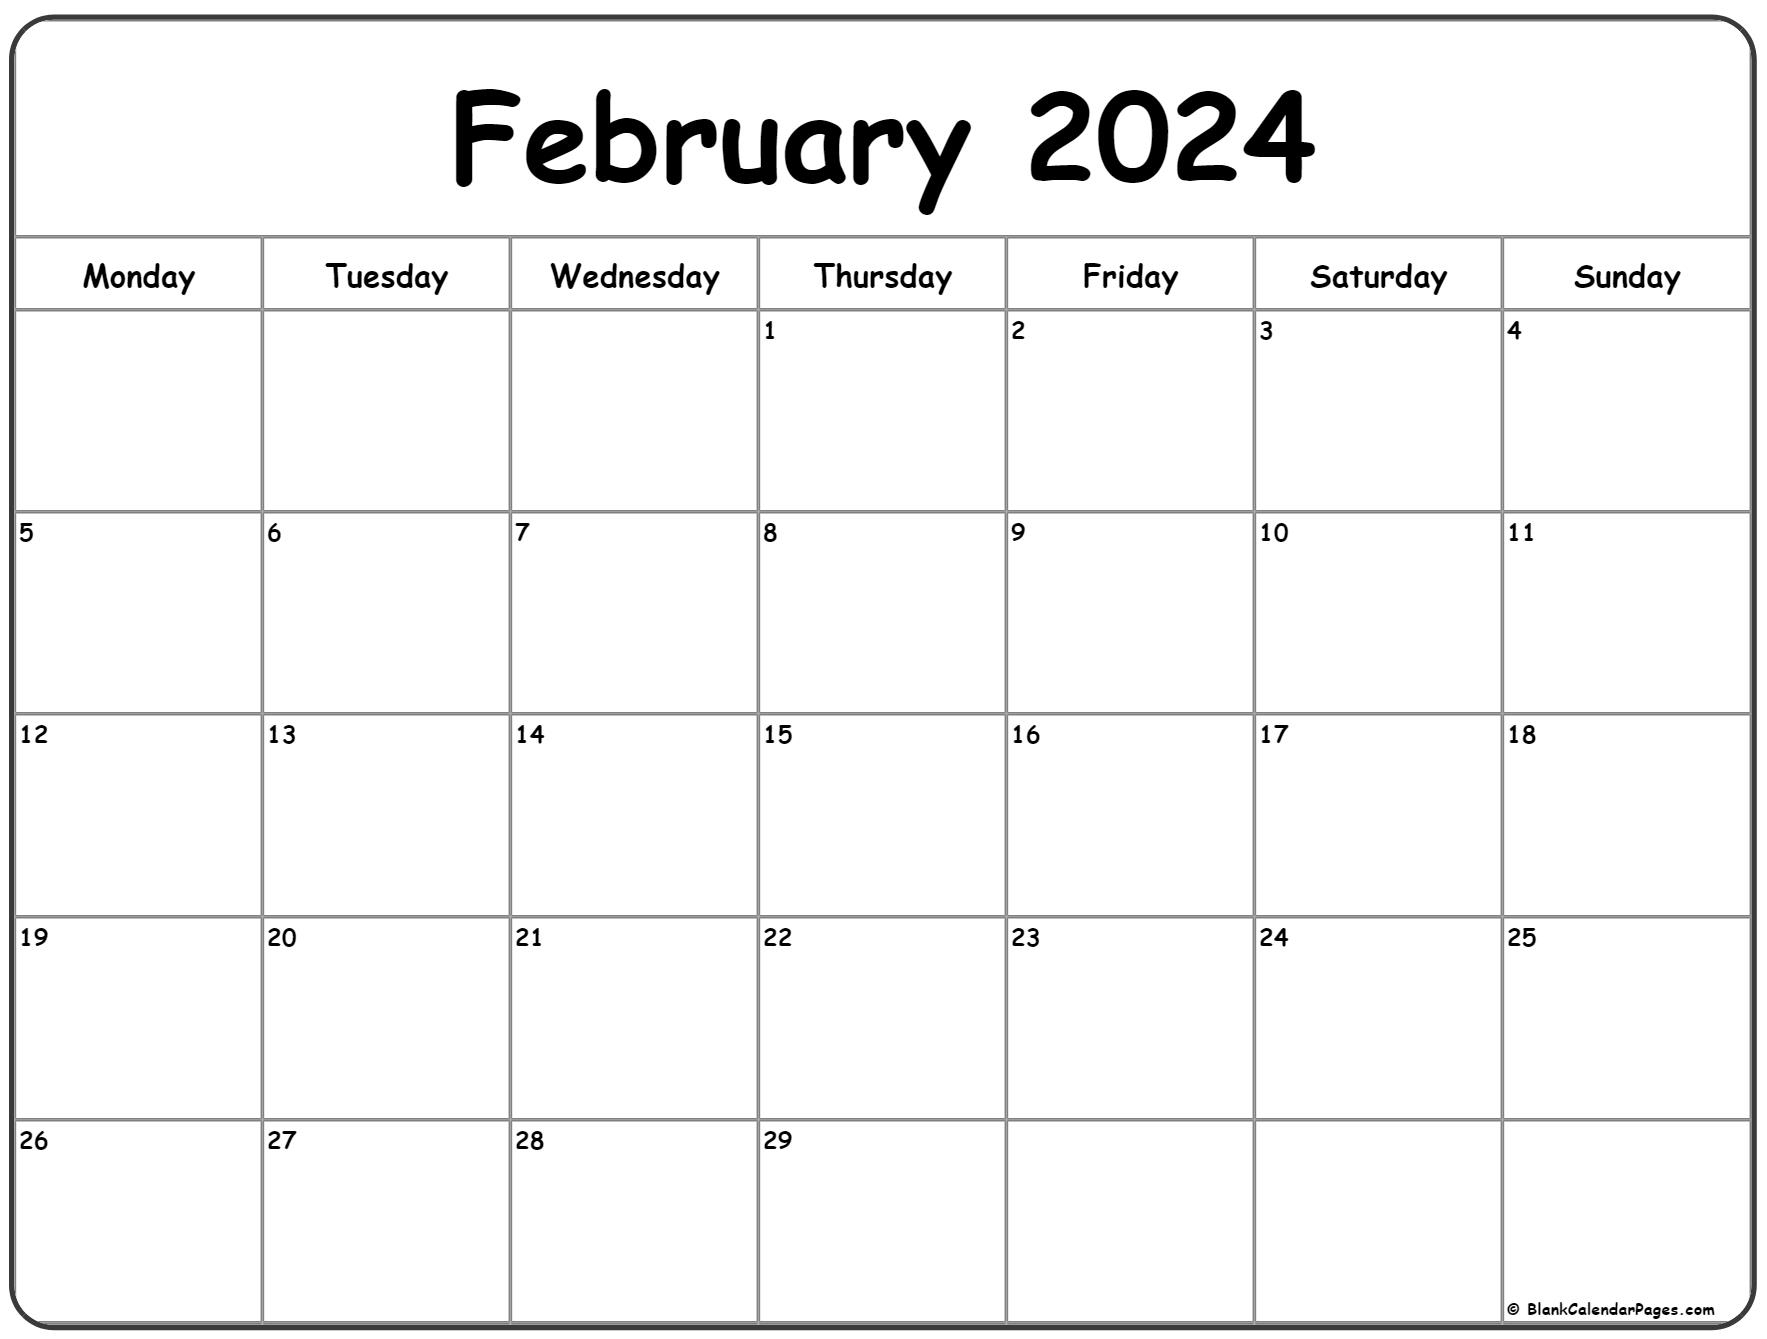 February 2024 Monday Calendar | Monday To Sunday for Blank Calendar Feb 2024 Printable